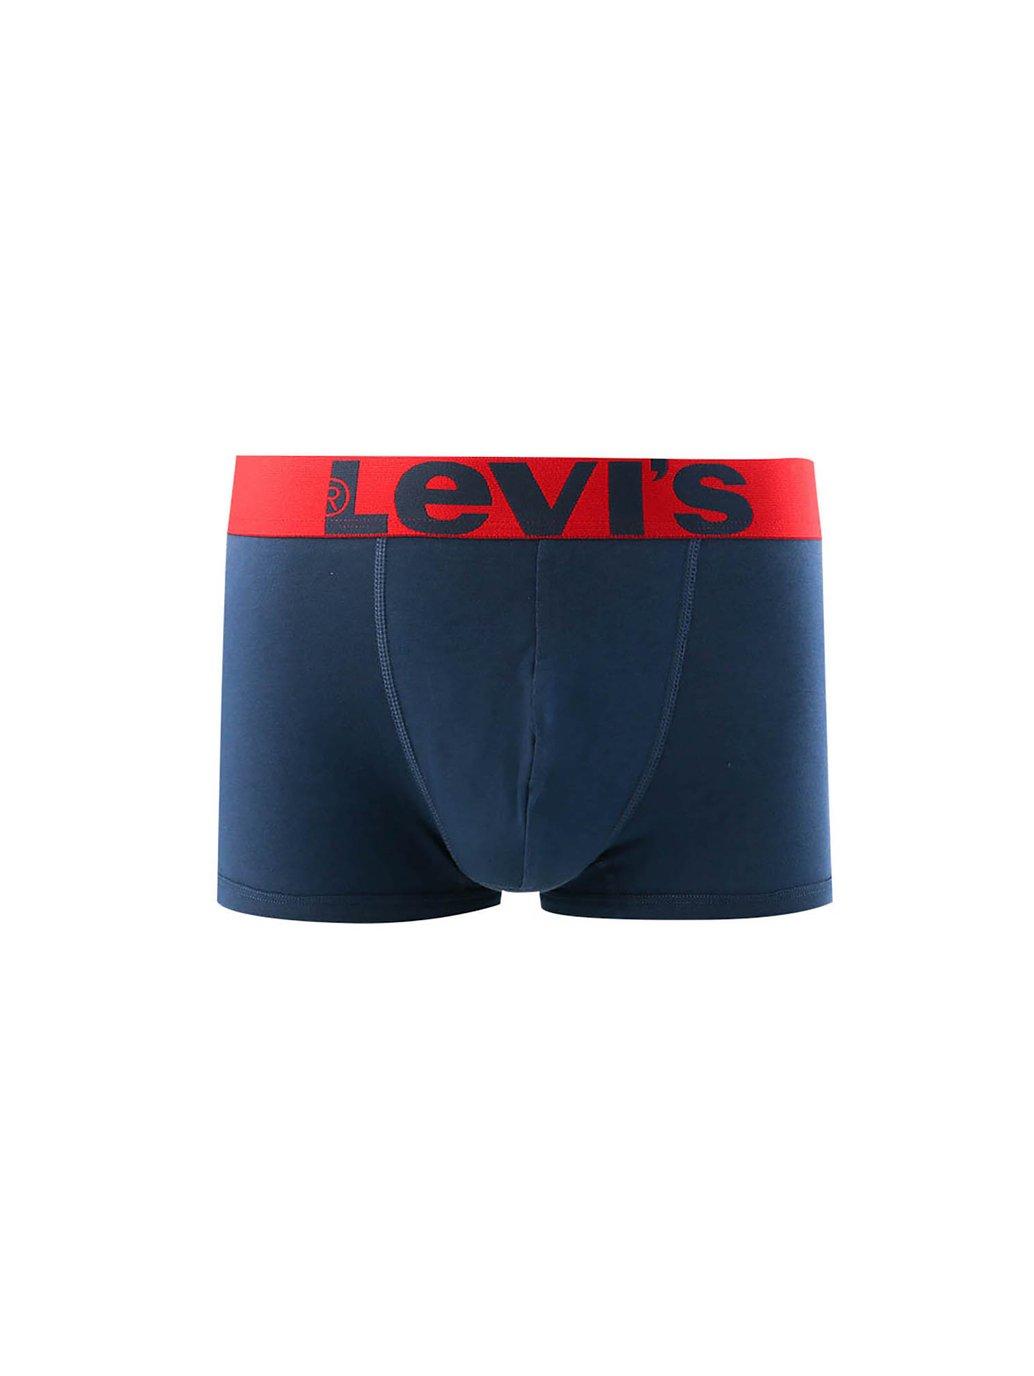 Buy Levi's® Men's COOLMAX® Trunks | Levi’s Official Online Store SG